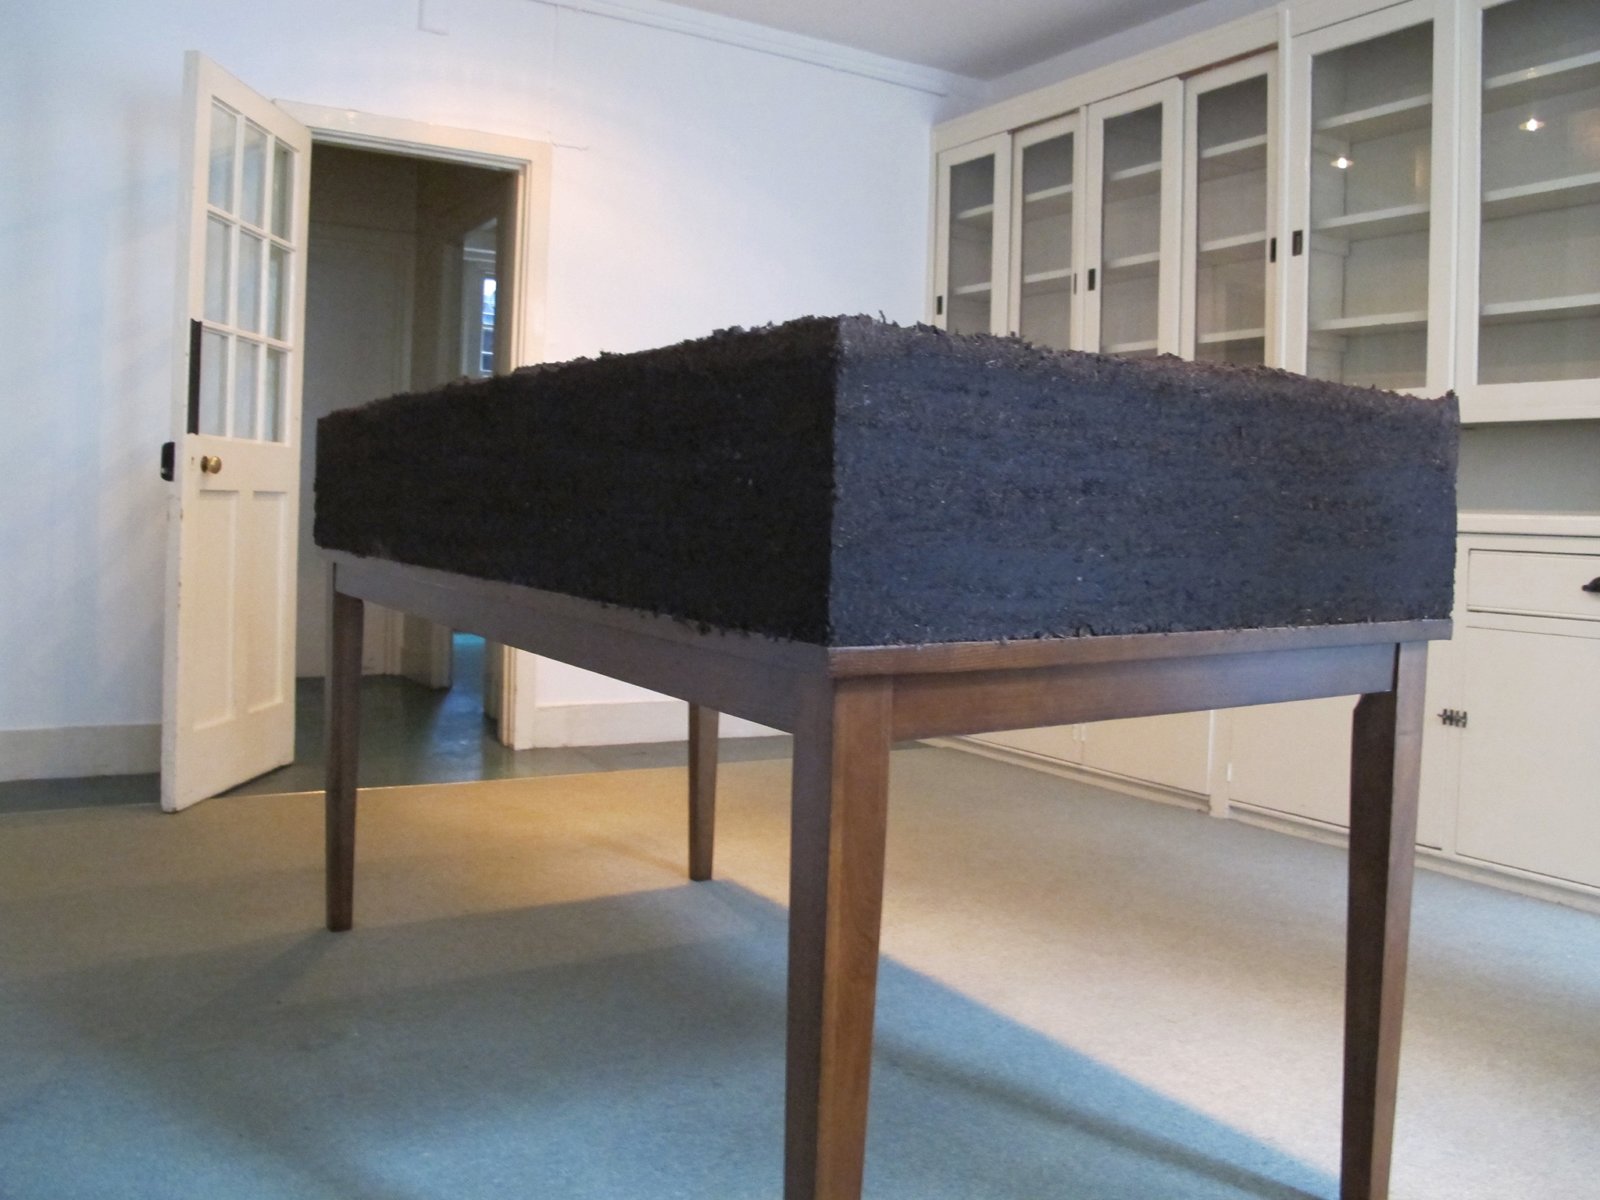 Abbas Akhavan, Dirt/Table, 2012, topsoil, water, wooden table, 42 x 36 x 72 in. (106 x 91 x 182 cm). Installation view, Study for a Garden, Delfina Foundation, London, UK, 2012